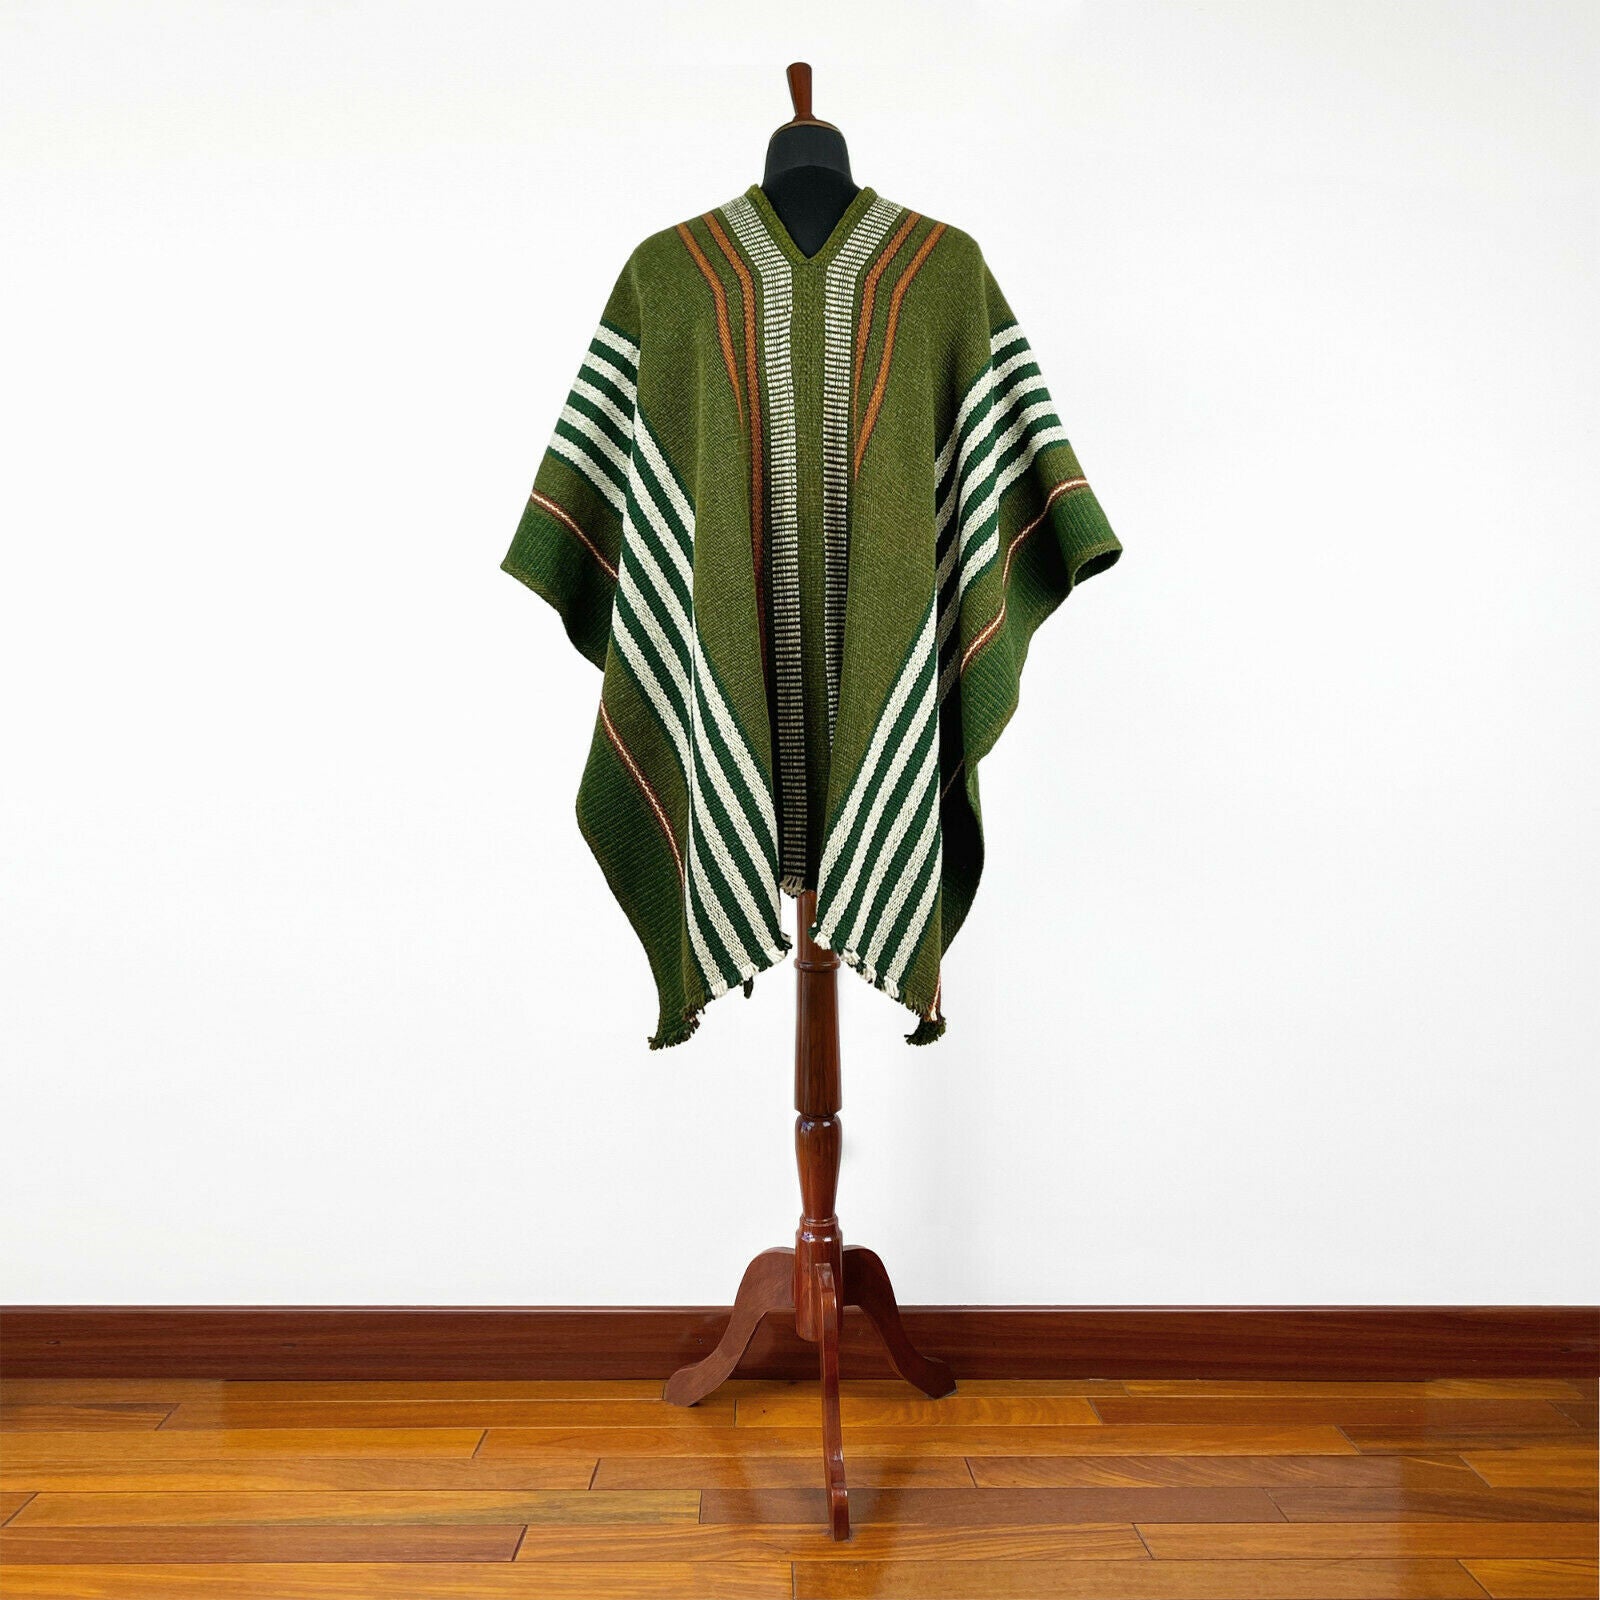 Pangui - Llama Wool Unisex South American Handwoven Thick Serape Poncho - striped - olive green